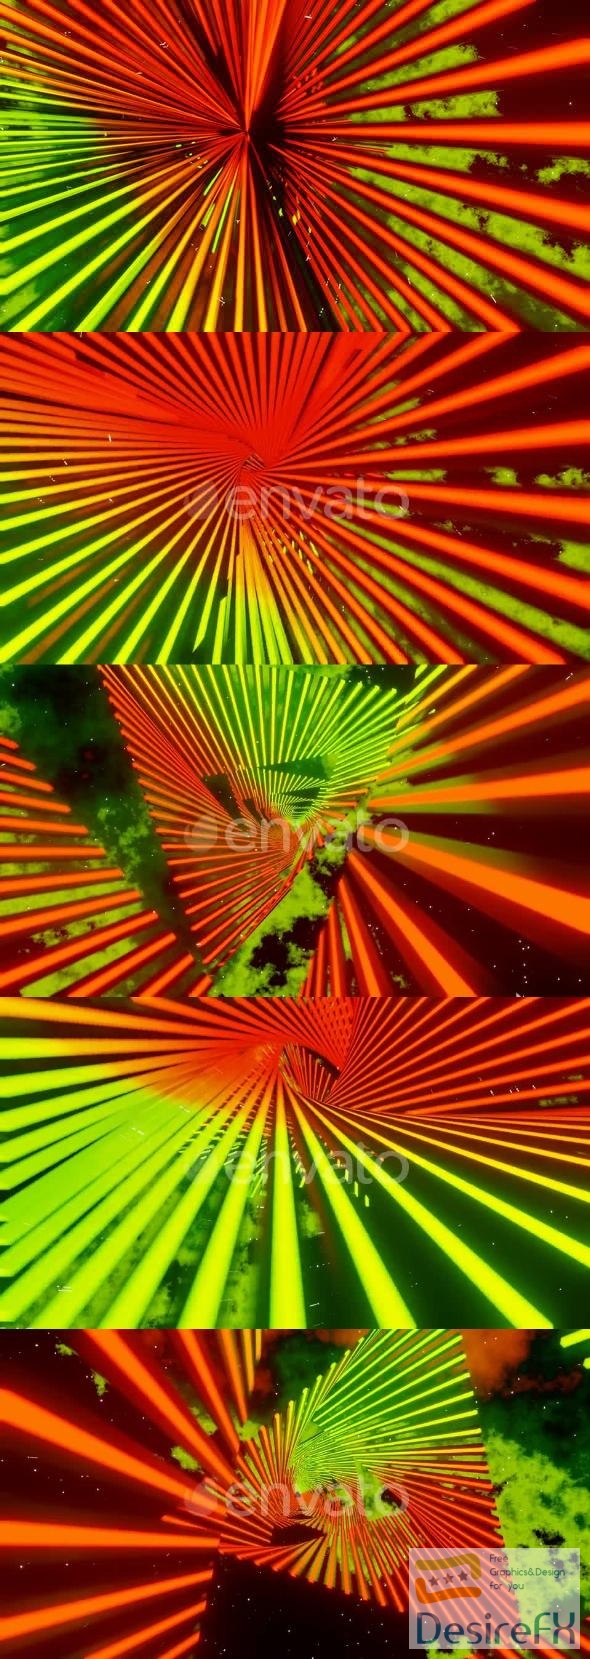 VideoHive Orange And Lime Neon Glowing Sci-Fi Triangular Dimension Background Vj Loop In 4K 47574172